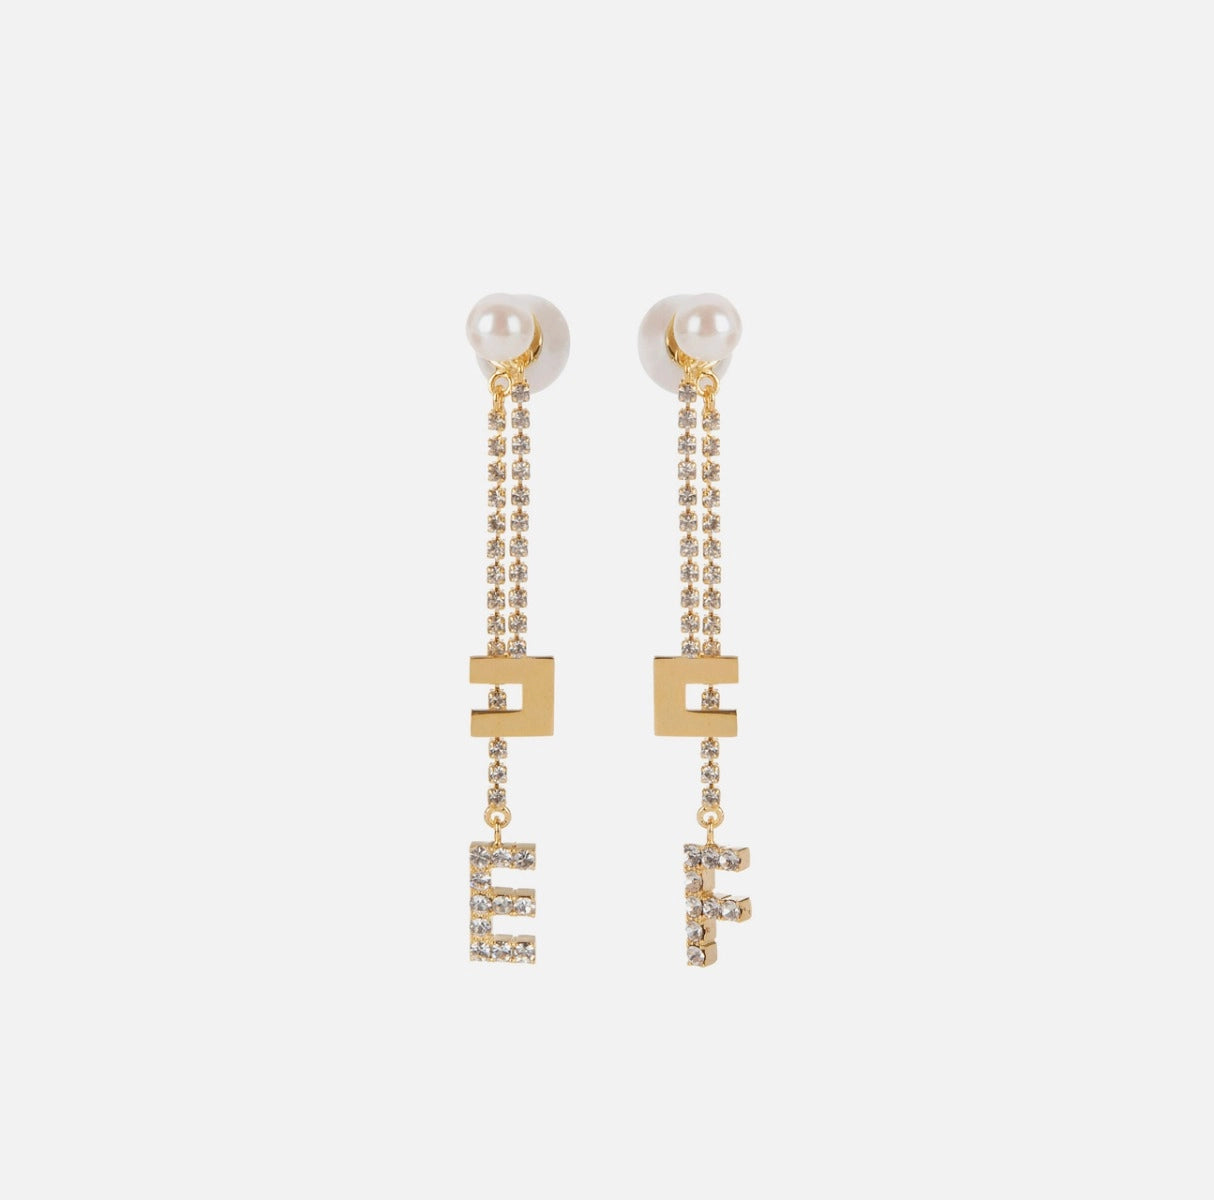 Crystal rhinestone chain earrings